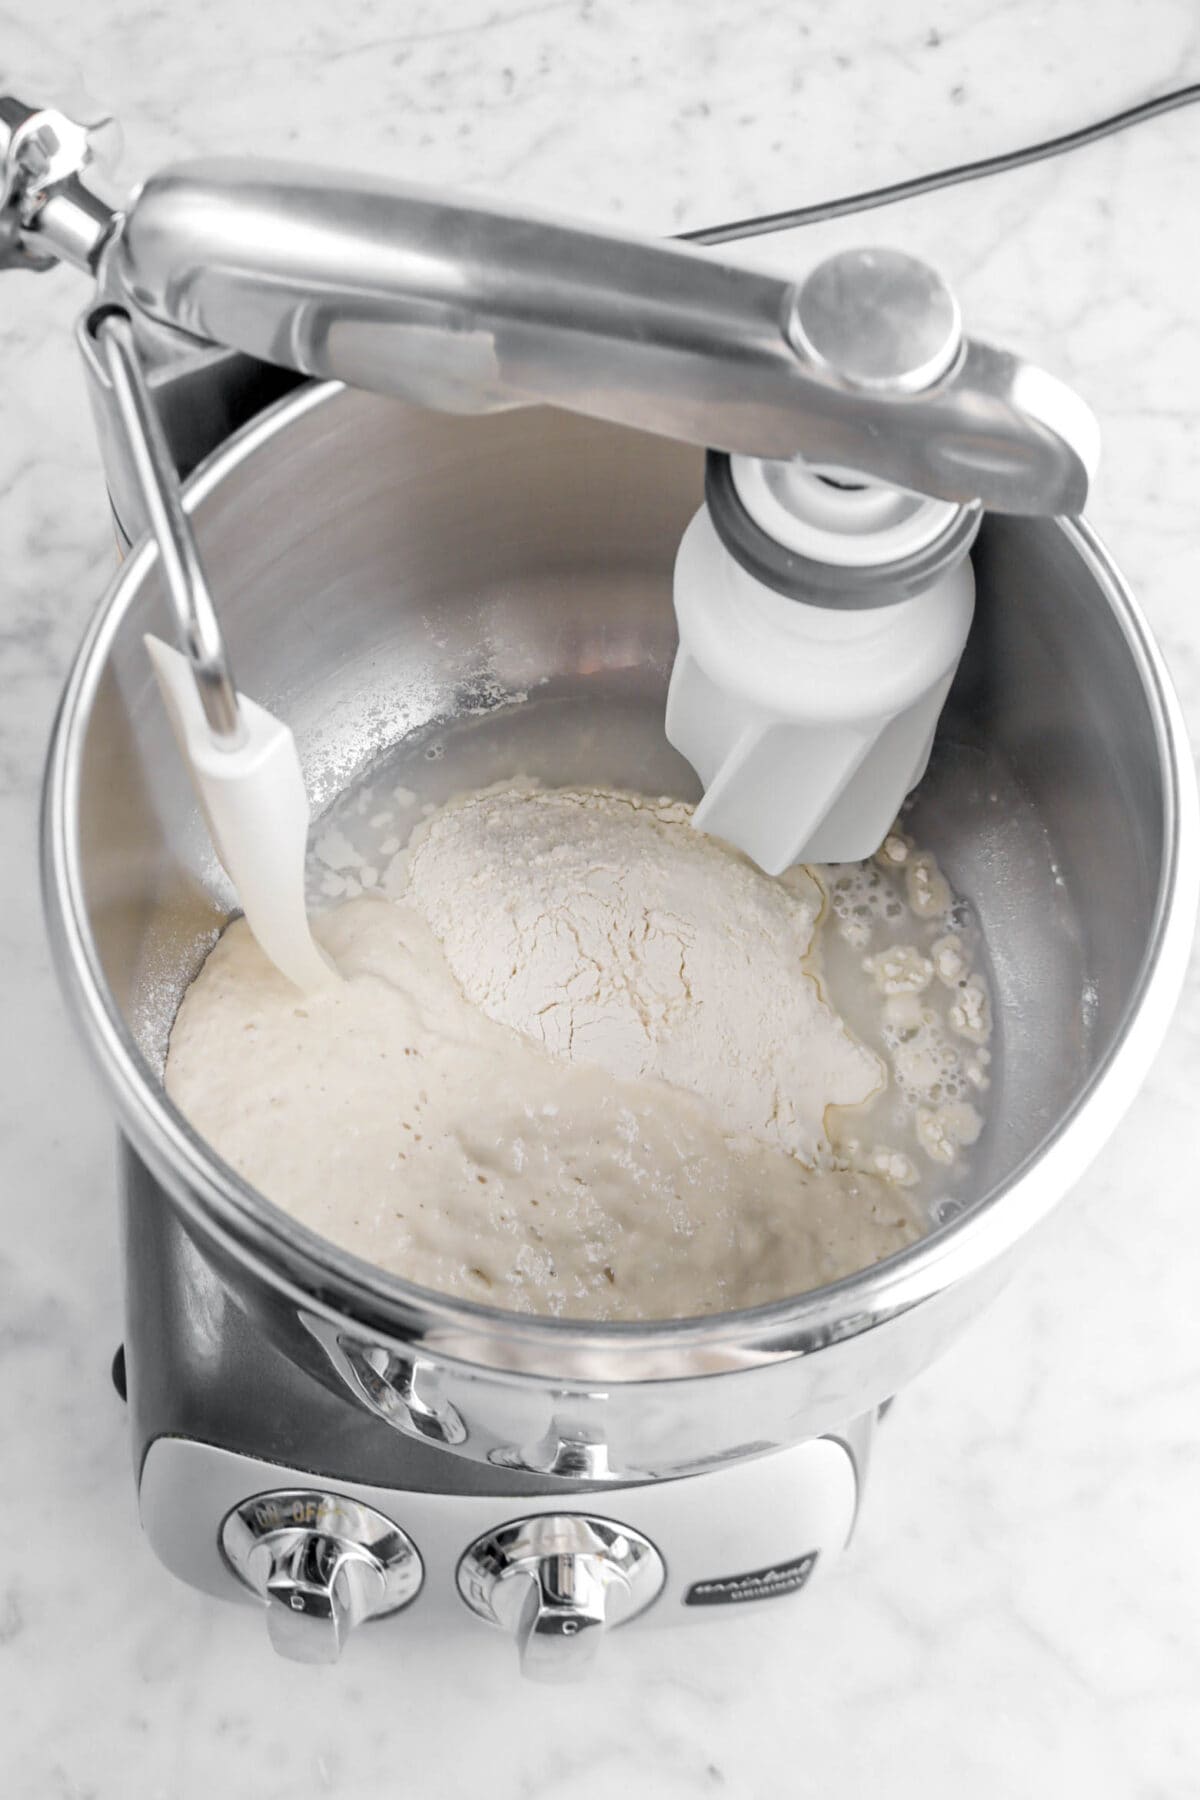 sourdough starter, flour, and water in mixer.